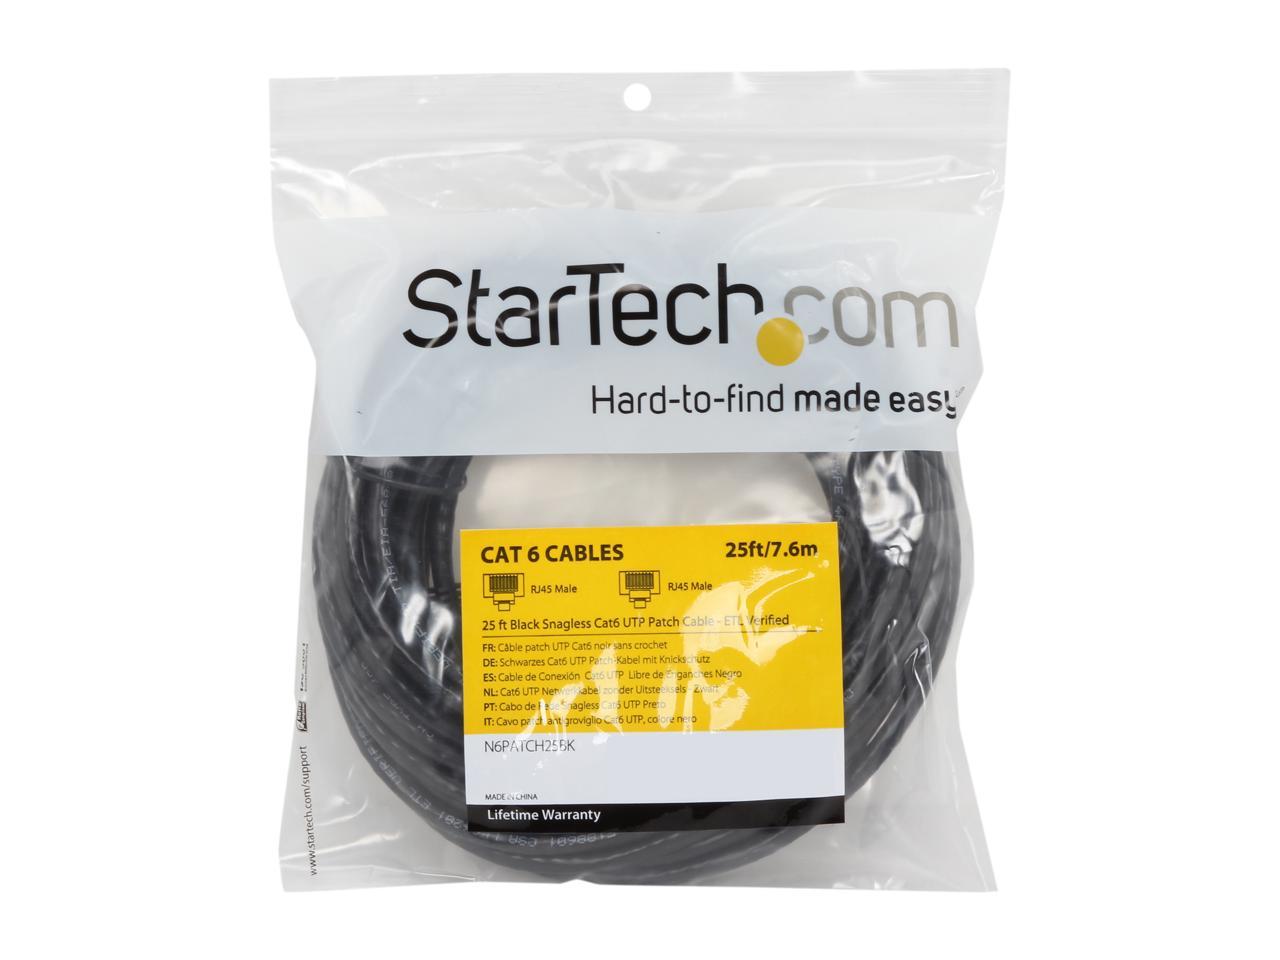 StarTech.com N6PATCH25BK 25 ft. Cat 6 Black Snagless Cat6 UTP Patch Cable - ETL Verified